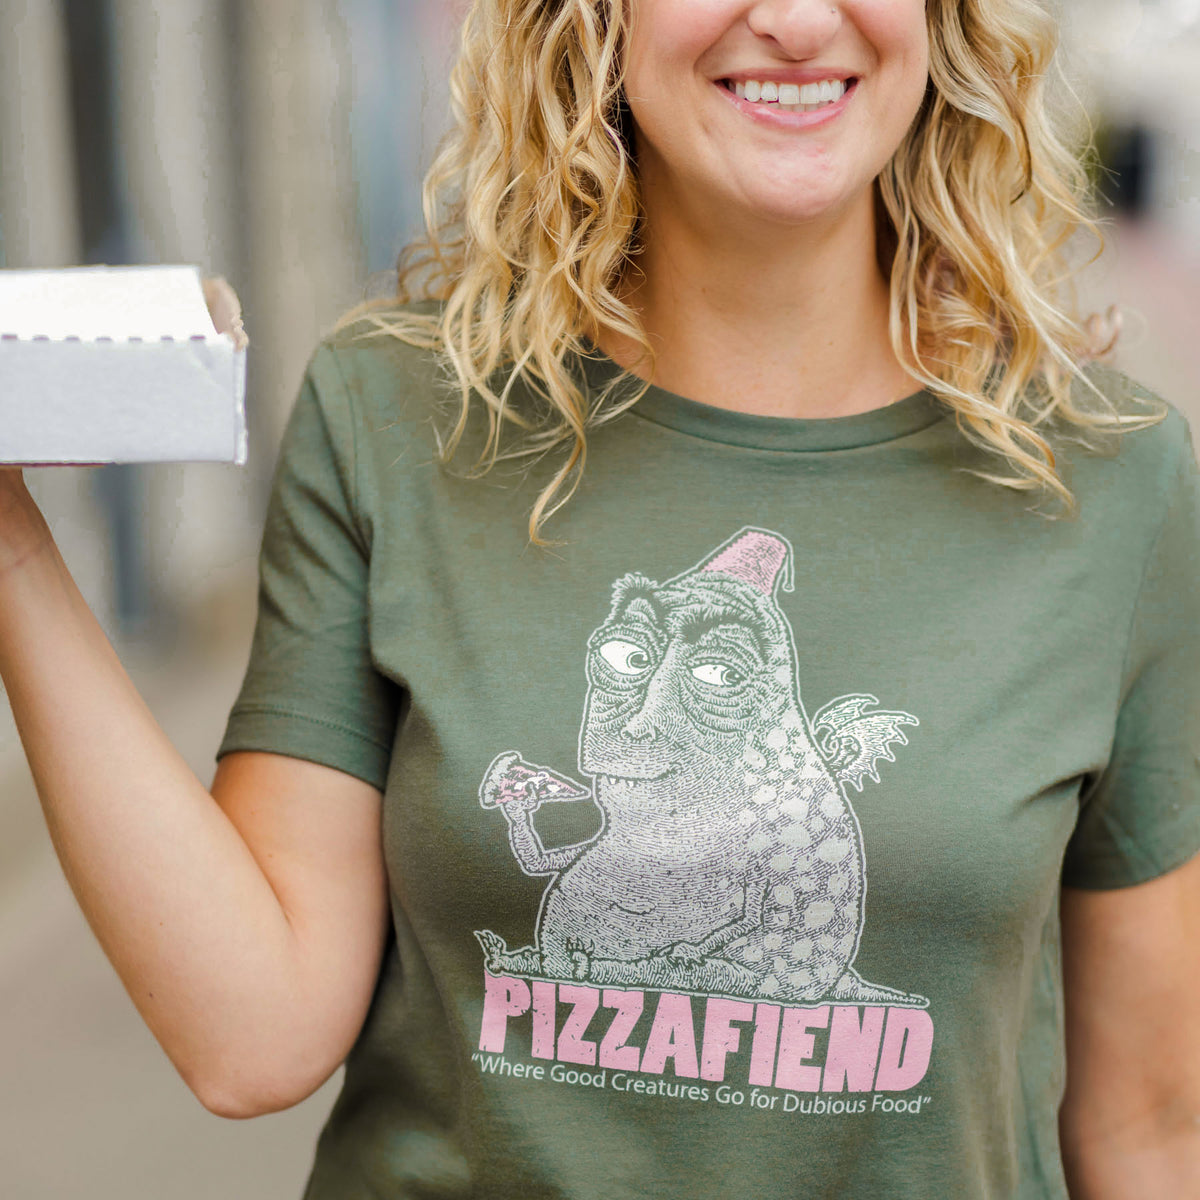 Pizzafiend Women&#39;s T-Shirt